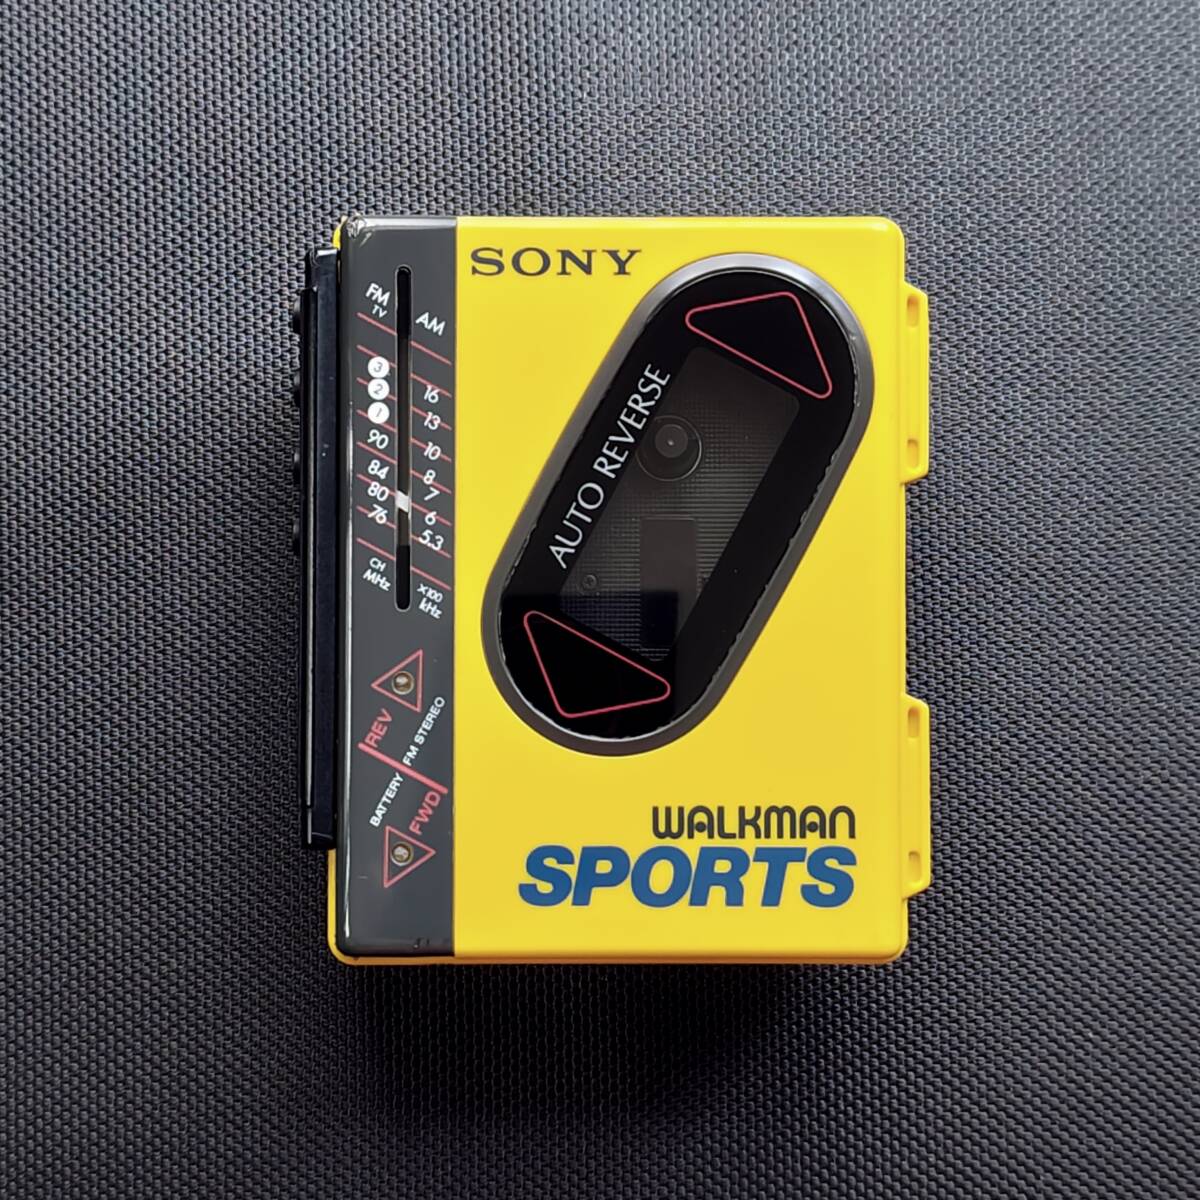 [ electrification reproduction operation verification goods ] cassette tape player Sony sport Walkman SONY WALKMAN WM-F75 GIG series wide FM/AM radio attaching 